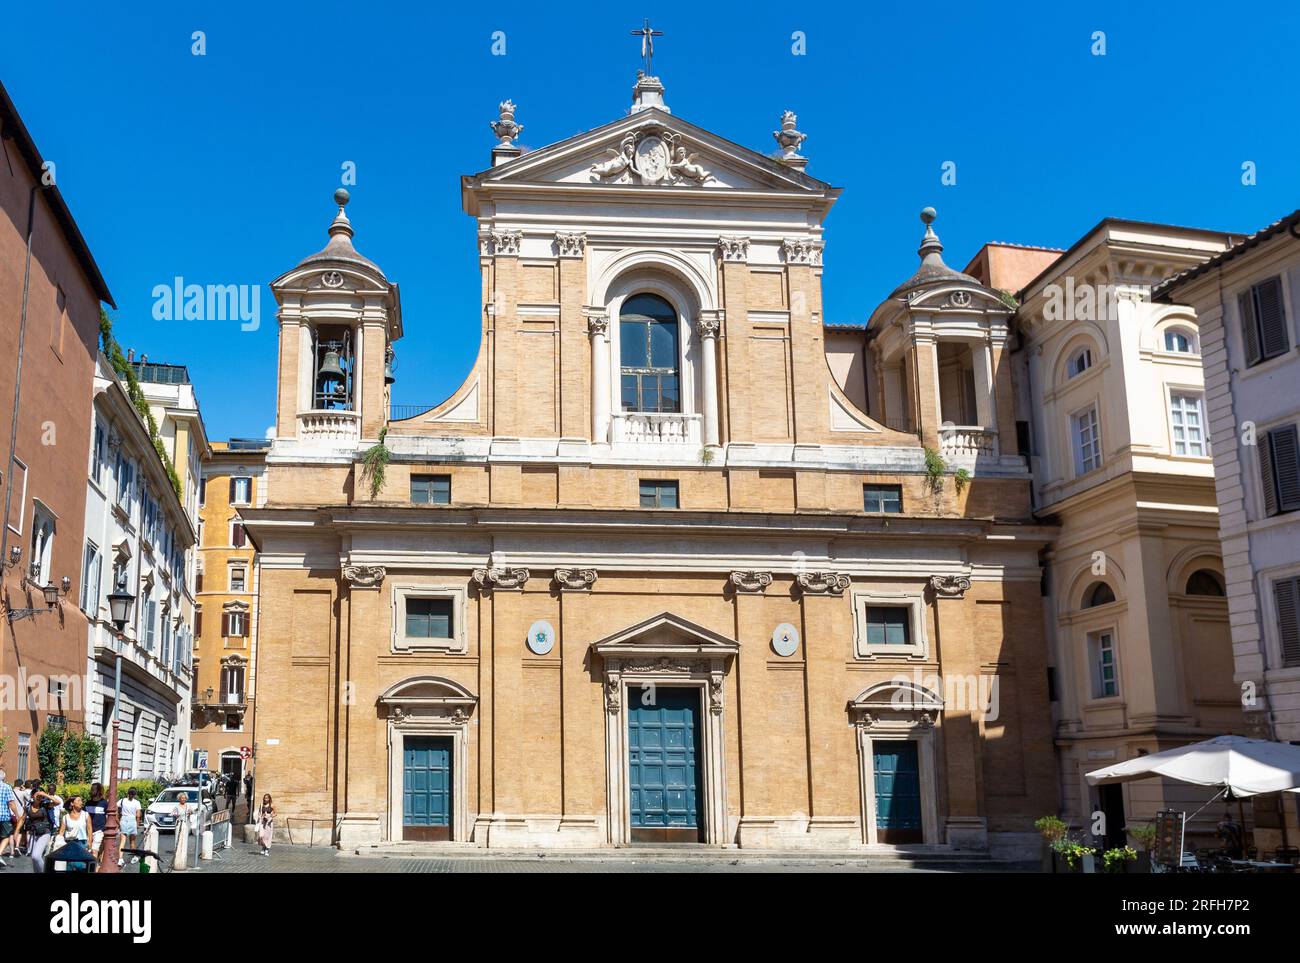 Rom, Latium, Italien, die Fassade der Kirche Santa Maria in Aquiro, auf italienisch, Chiesa di Santa Maria in Aquiro an der Piazza Capranica. Stockfoto